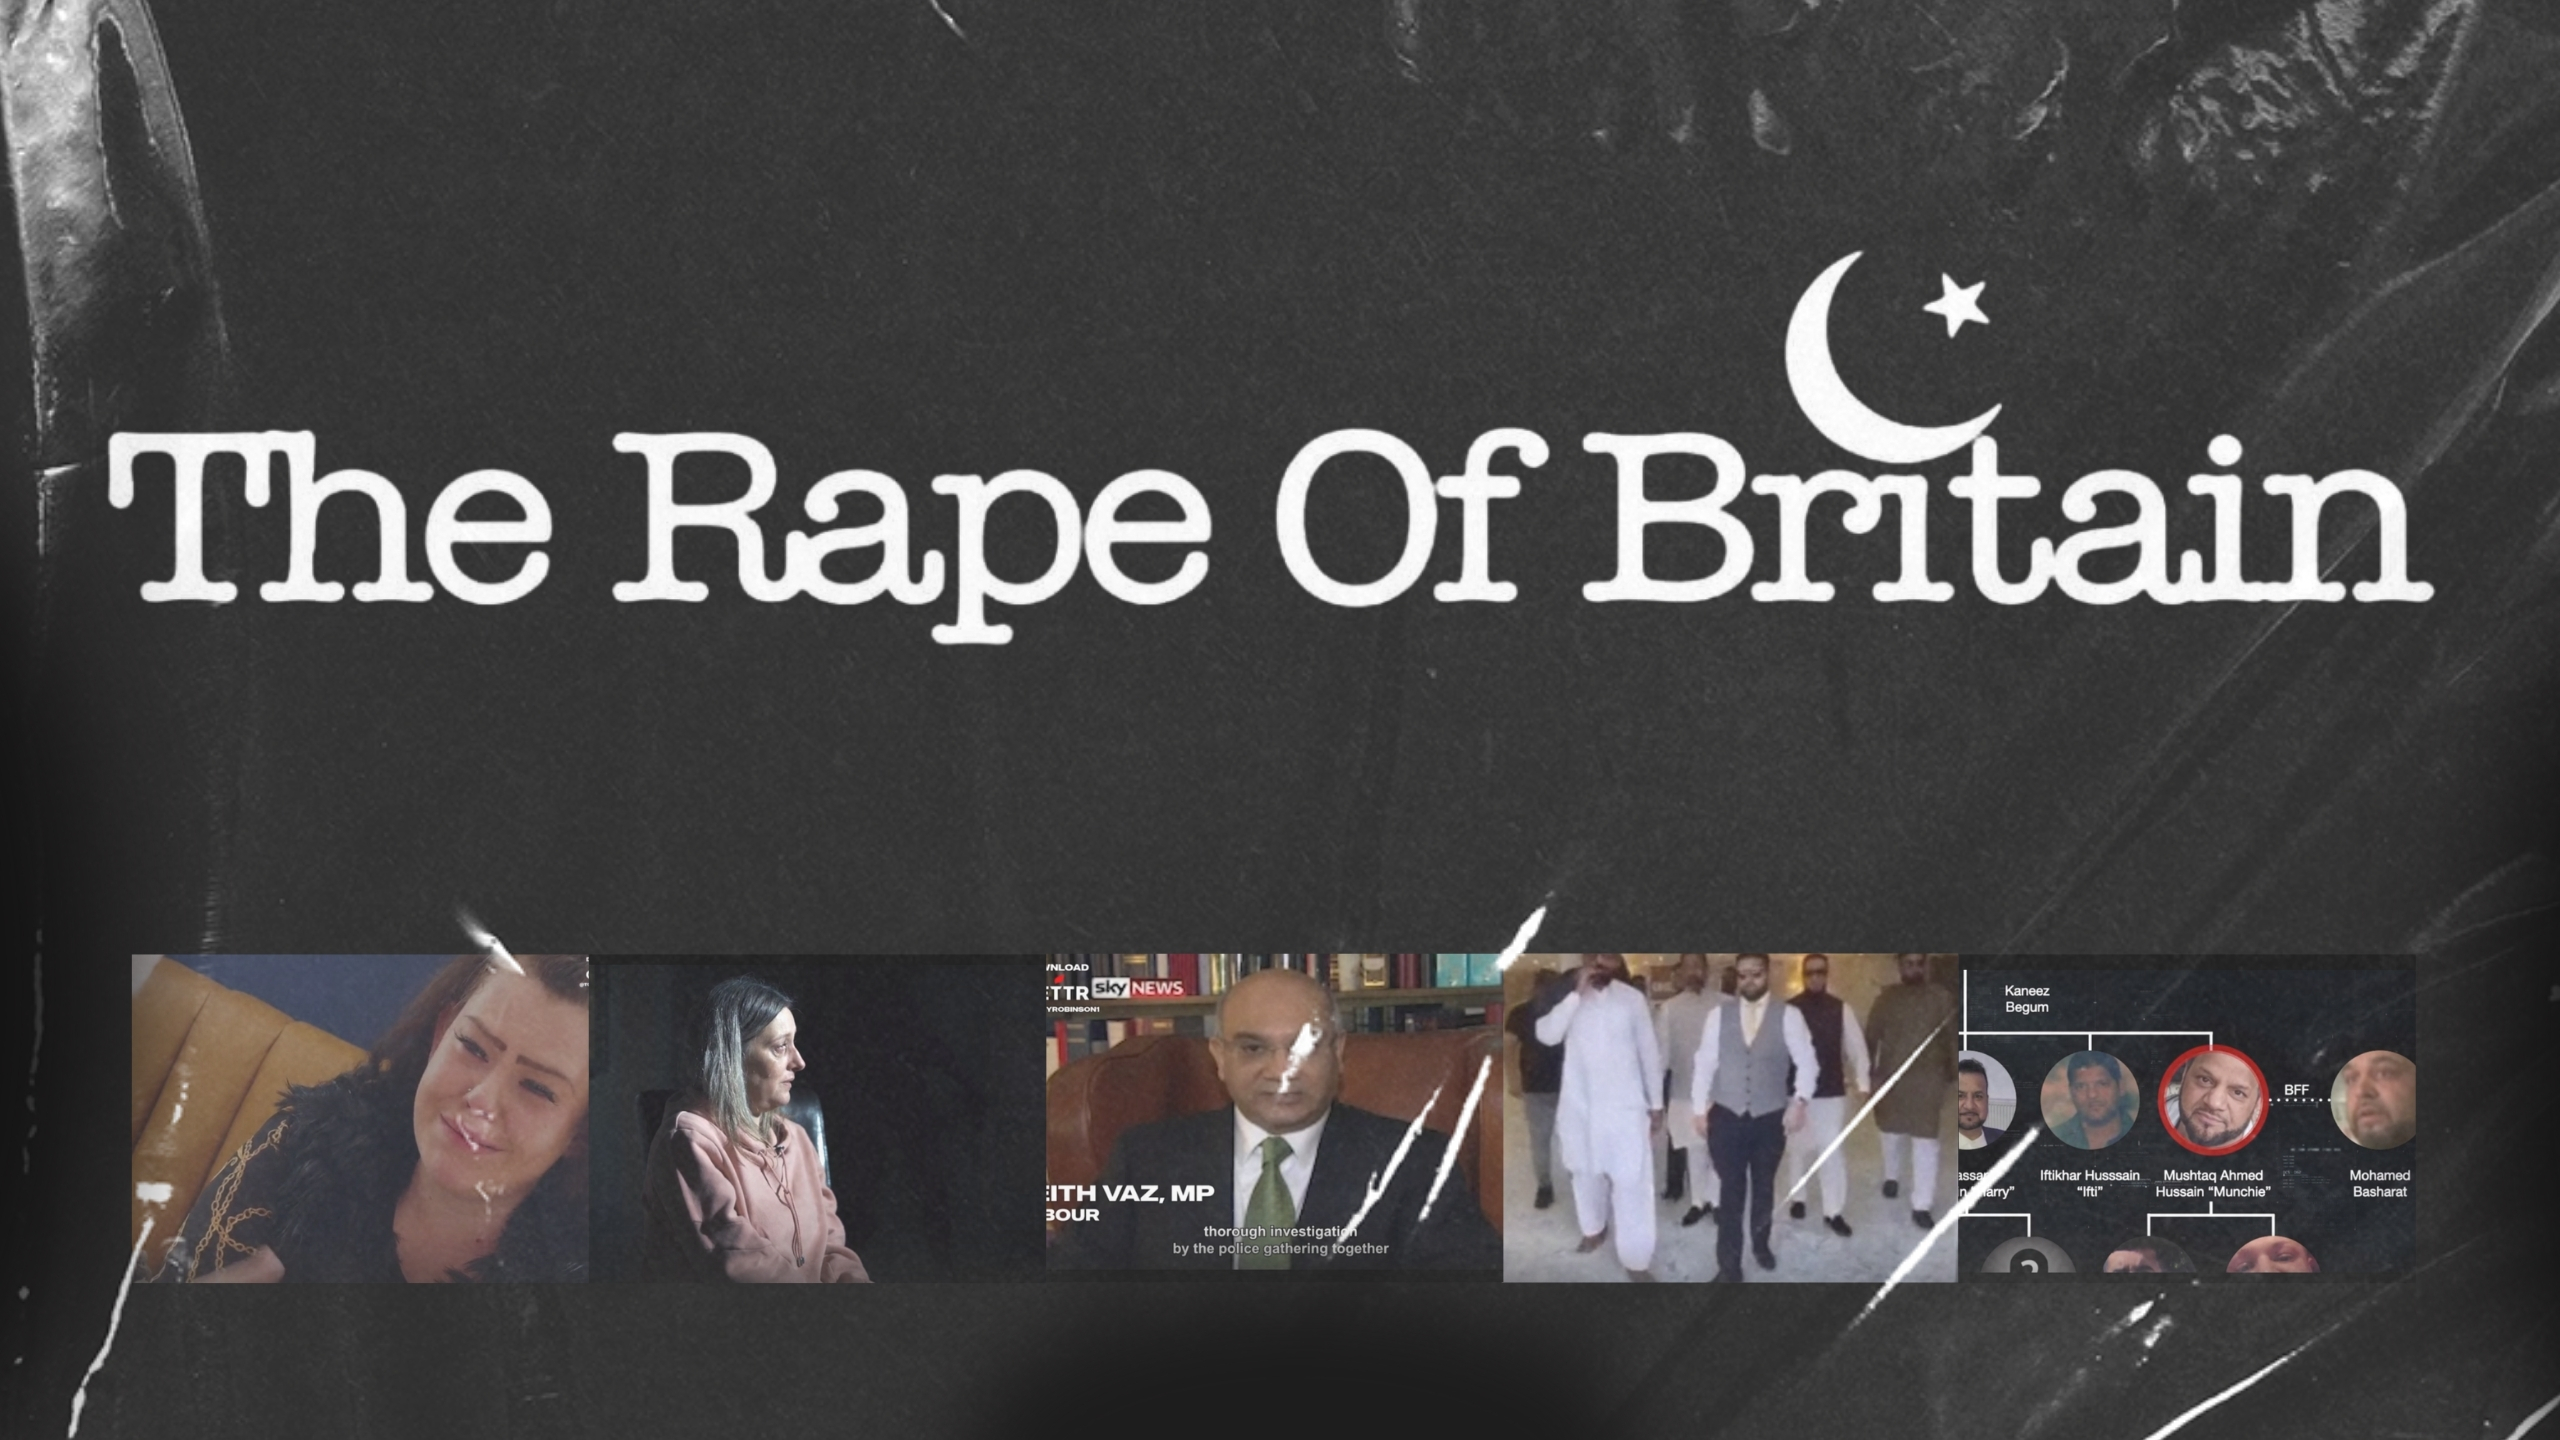 The Rape of Britain